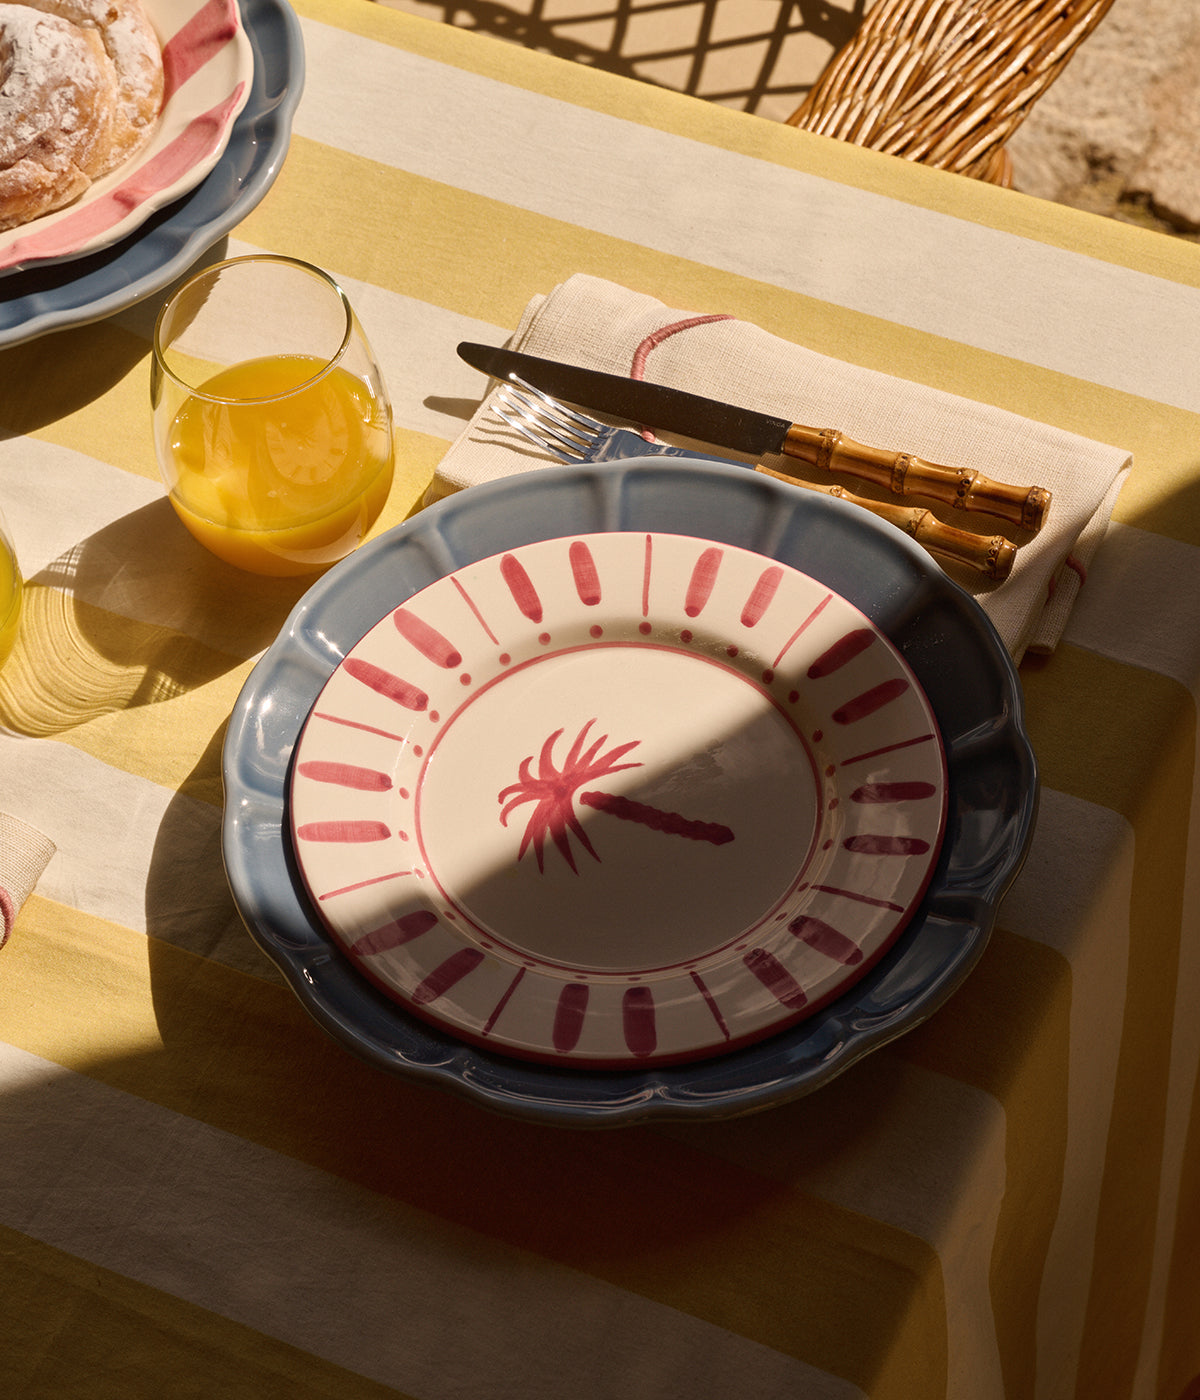 Cannes dinner plate - Dark pink 28 cm